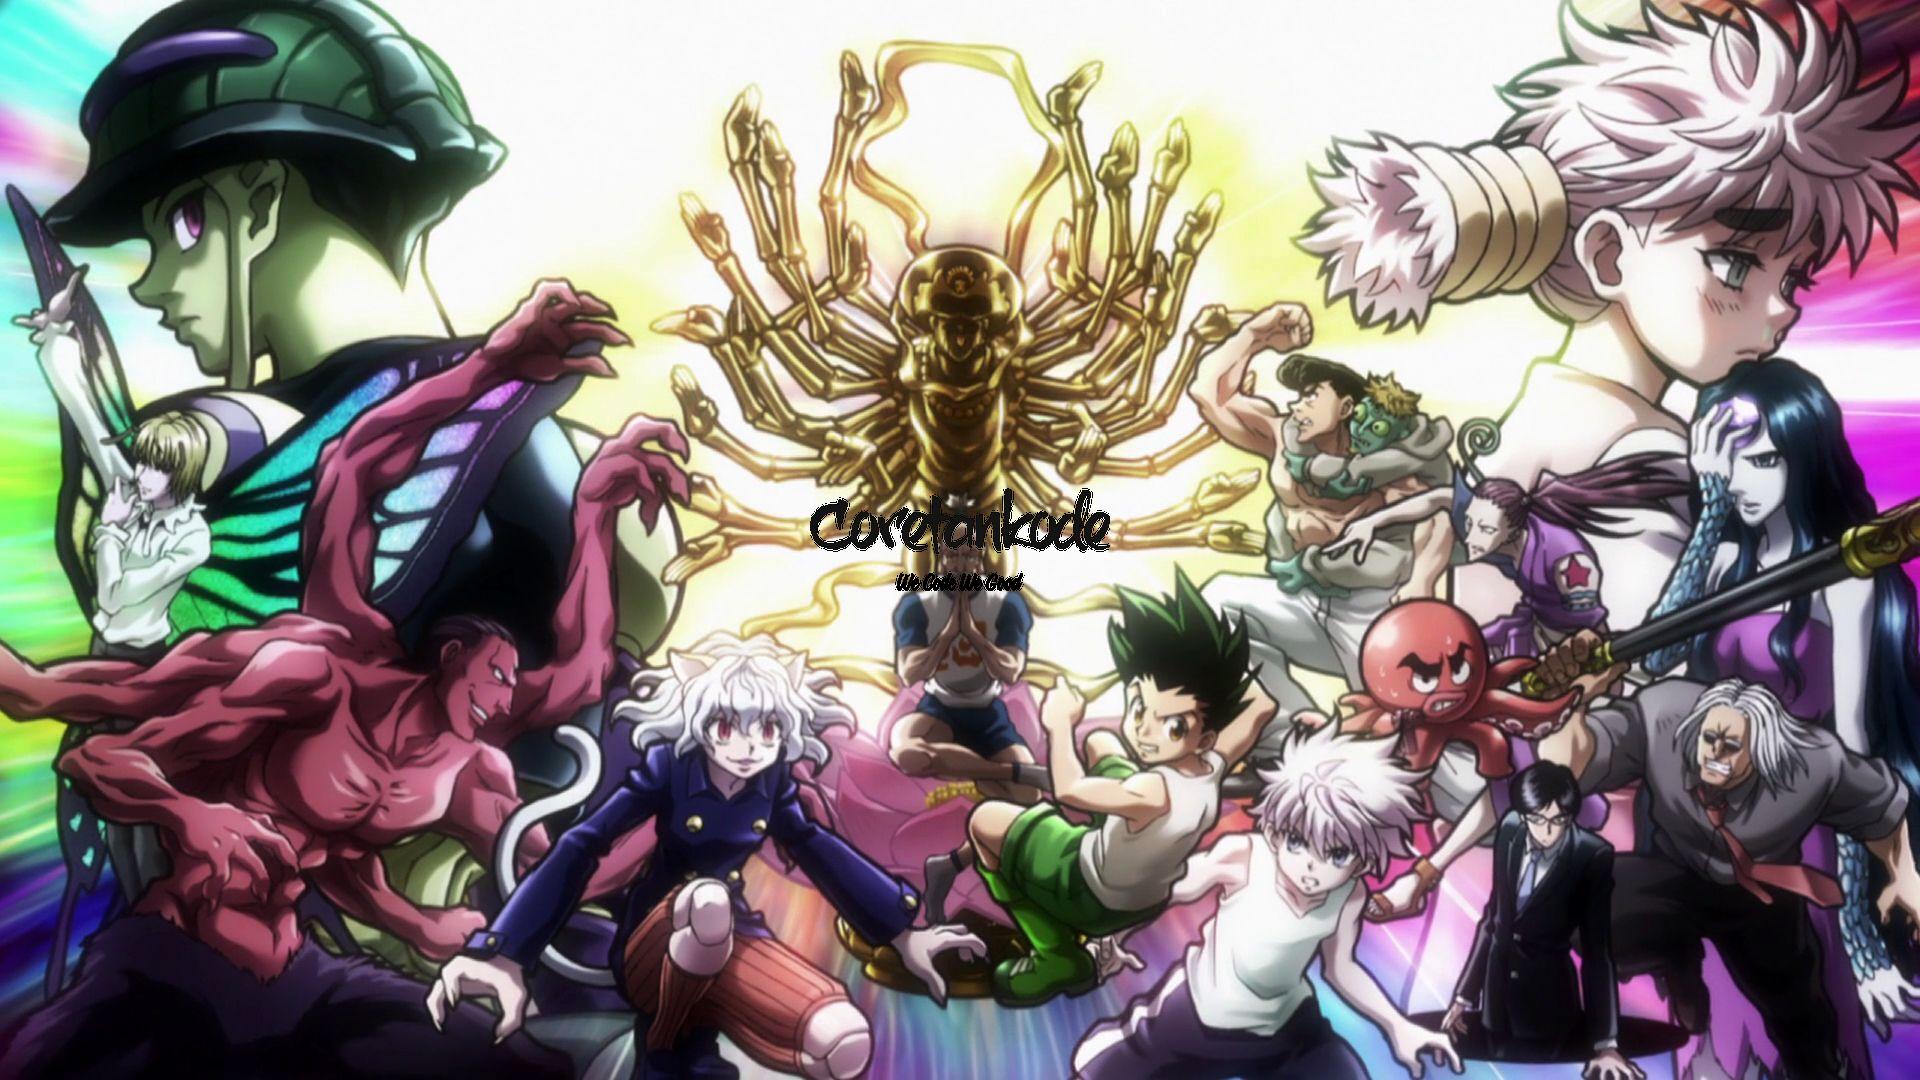 Situs Streaming & Download Anime sub Indo Terbaik - CoretanKode